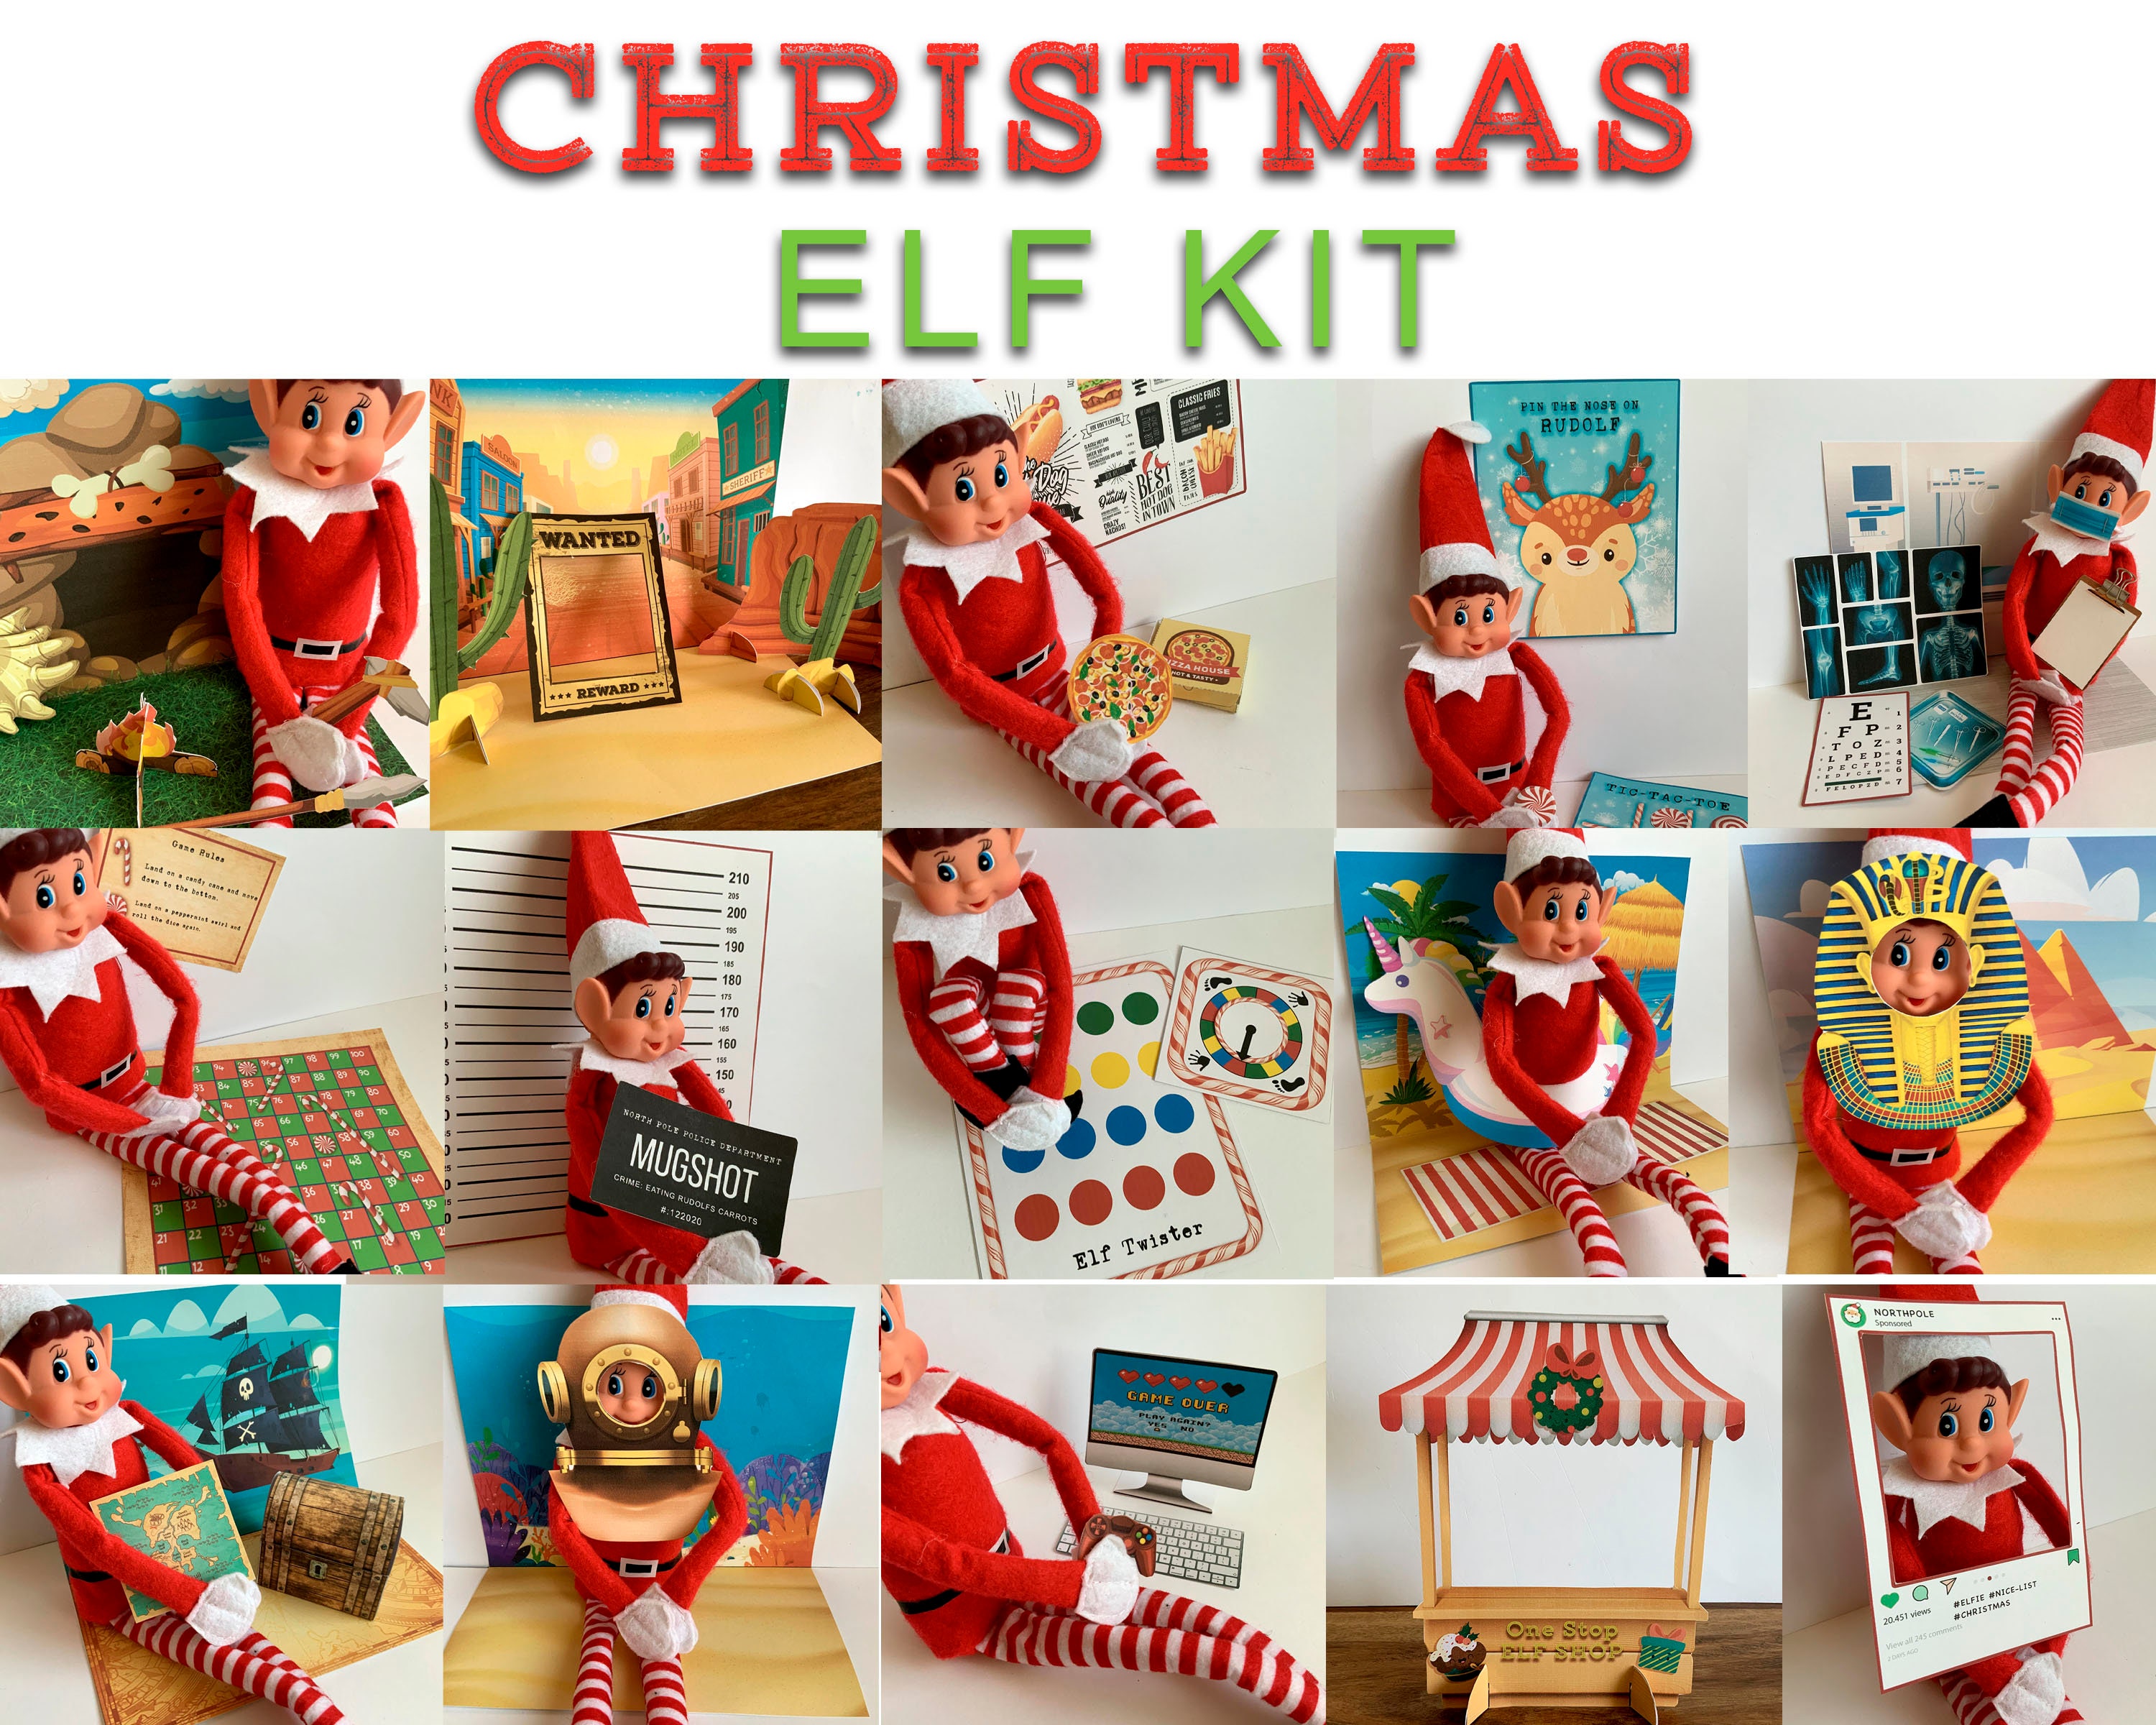 All Inclusive Christmas Activities Box Kit 26 Days of Elf on the Shelf Antics 